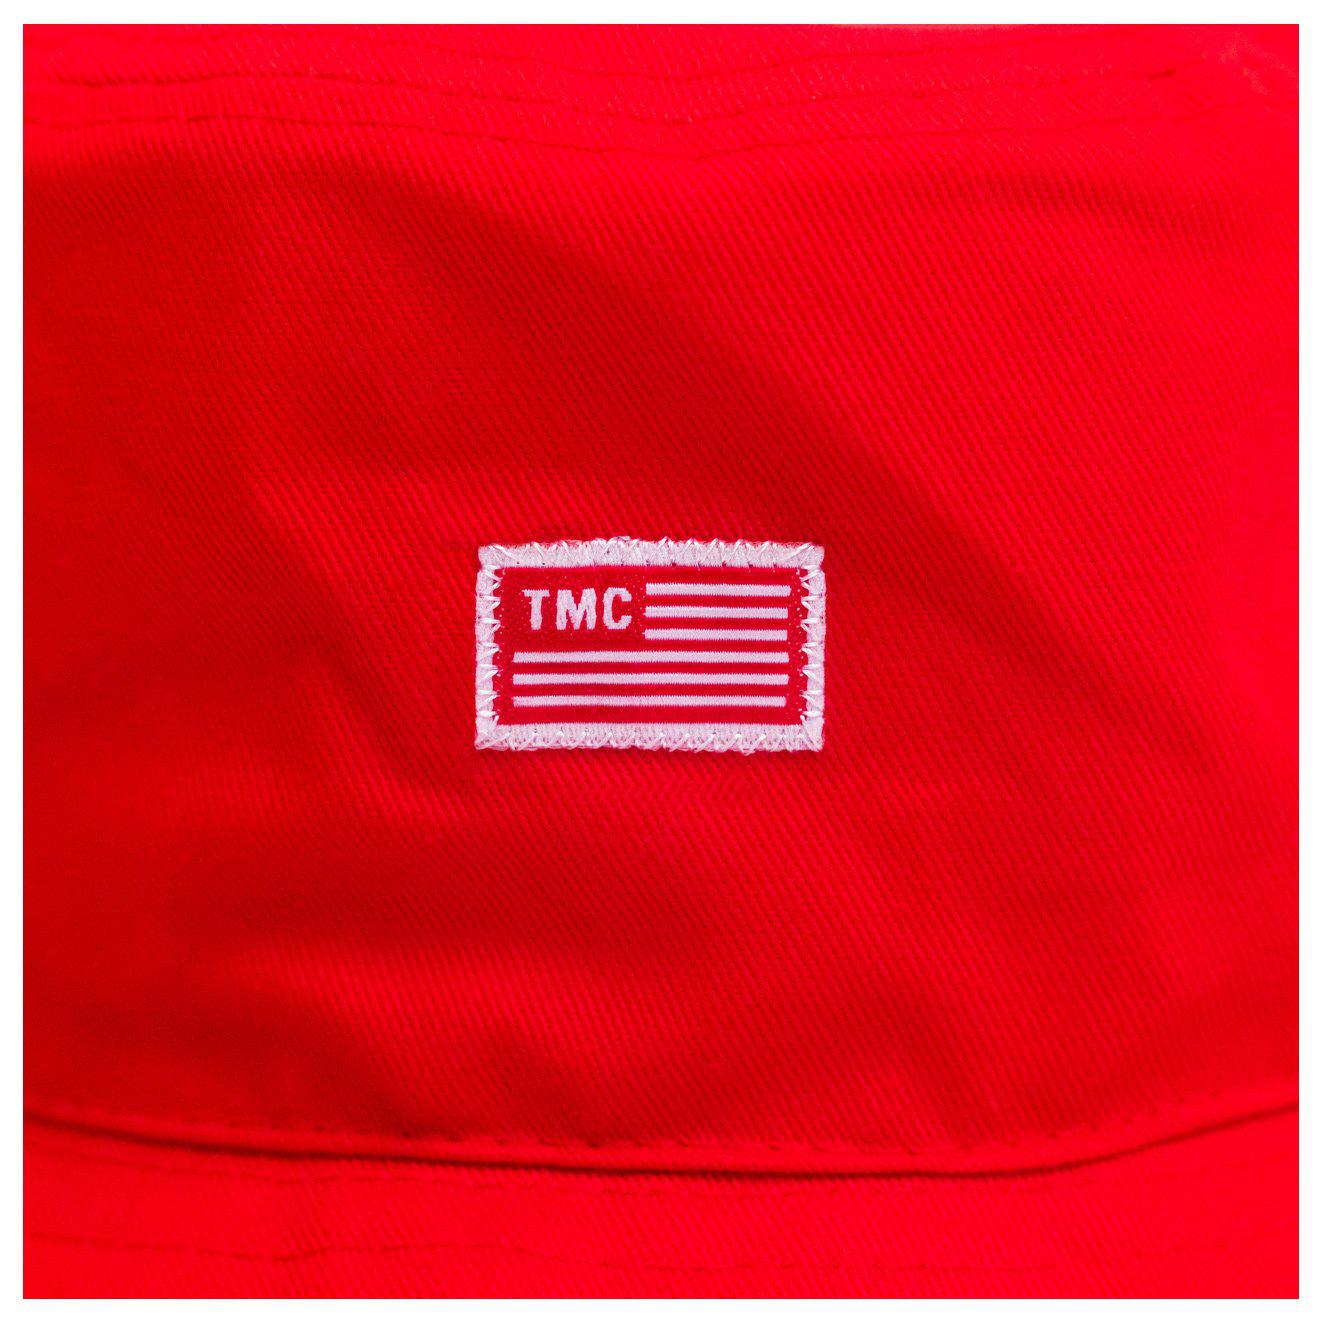 TMC Flag Bucket Hat - Red-The Marathon Clothing